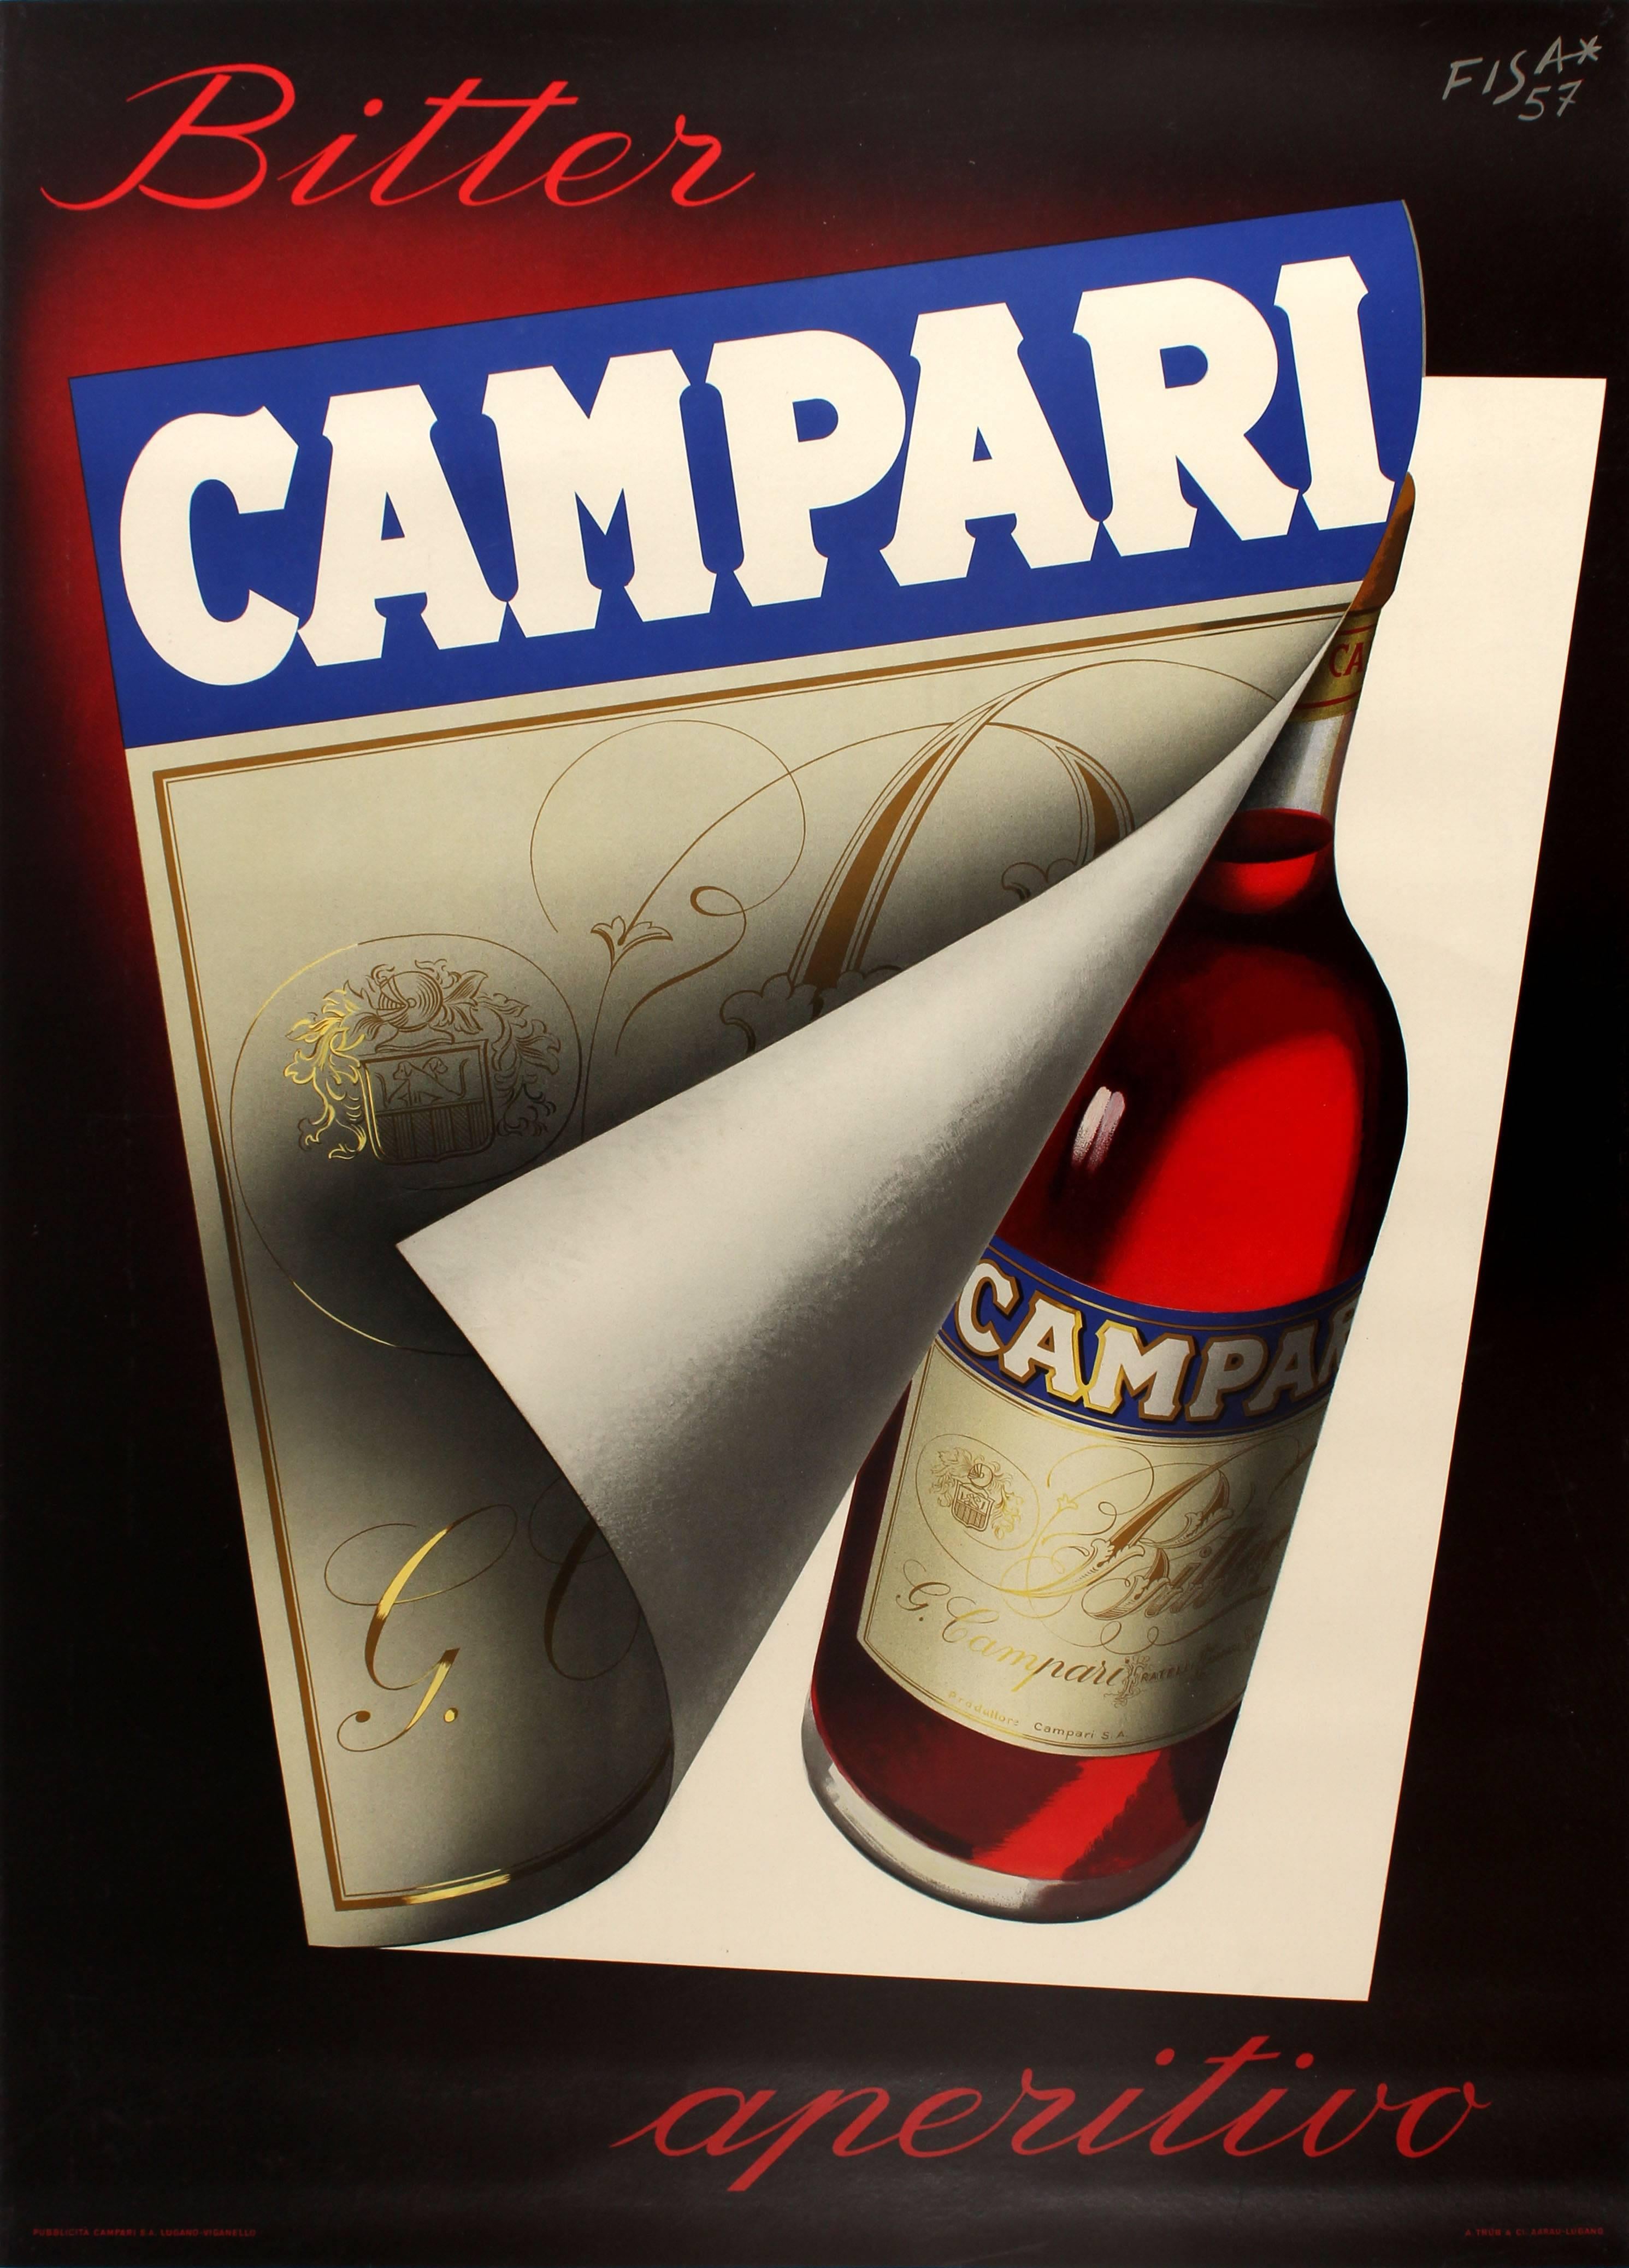 Carlo Fisanotti Print - Large Original Vintage Italian Drink Poster By Fisa For Bitter Campari Aperitif